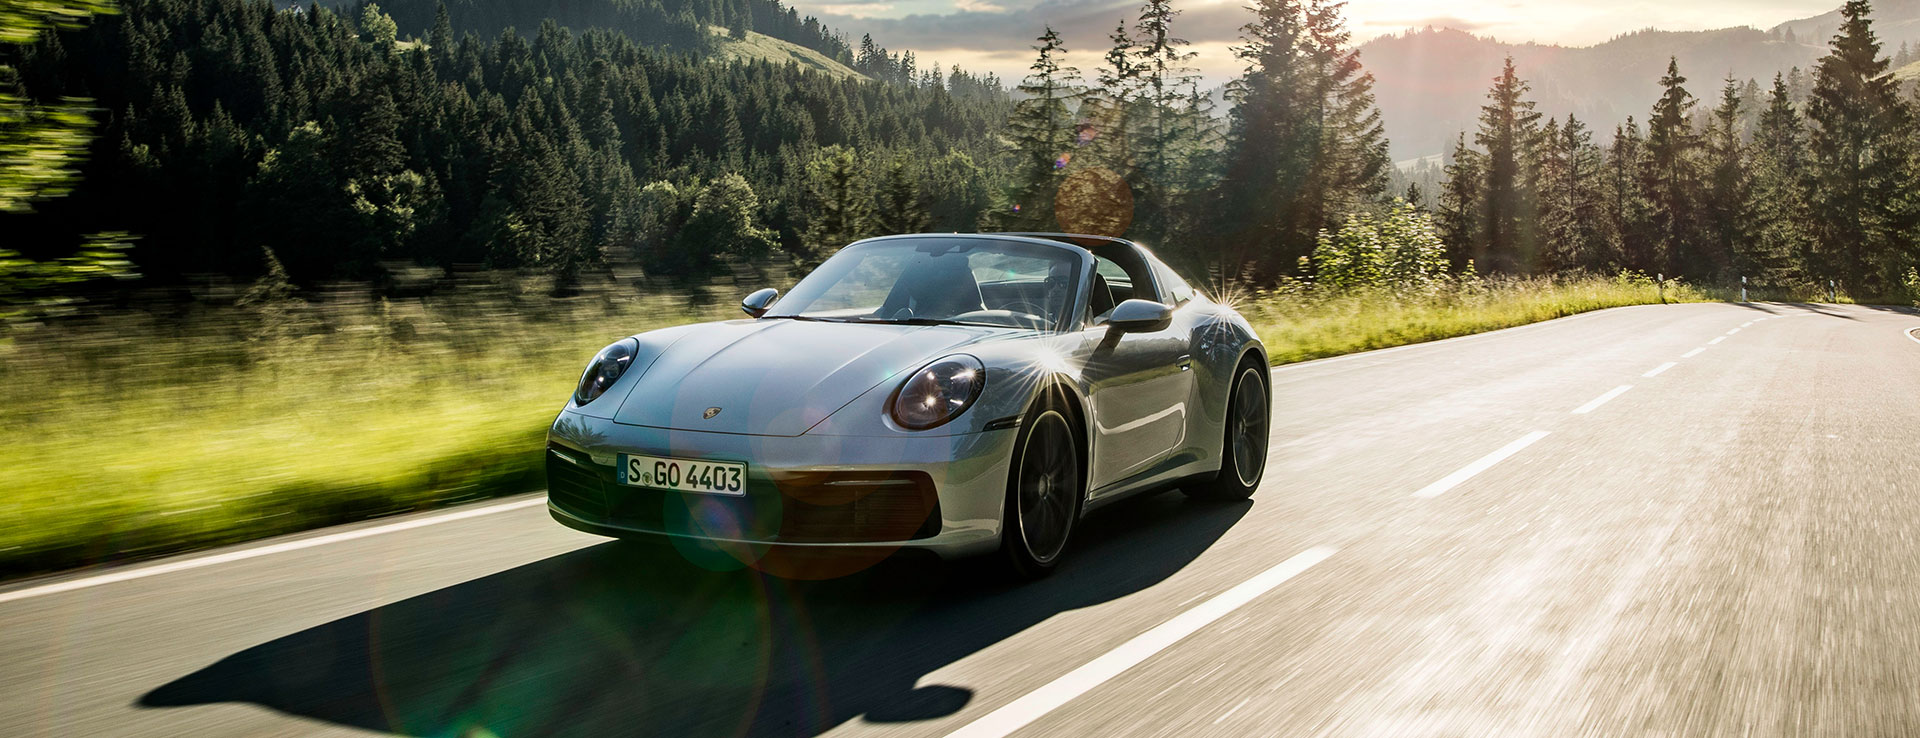 Đánh giá chi tiết xe Porsche Cayenne 2020 - Camry.vn